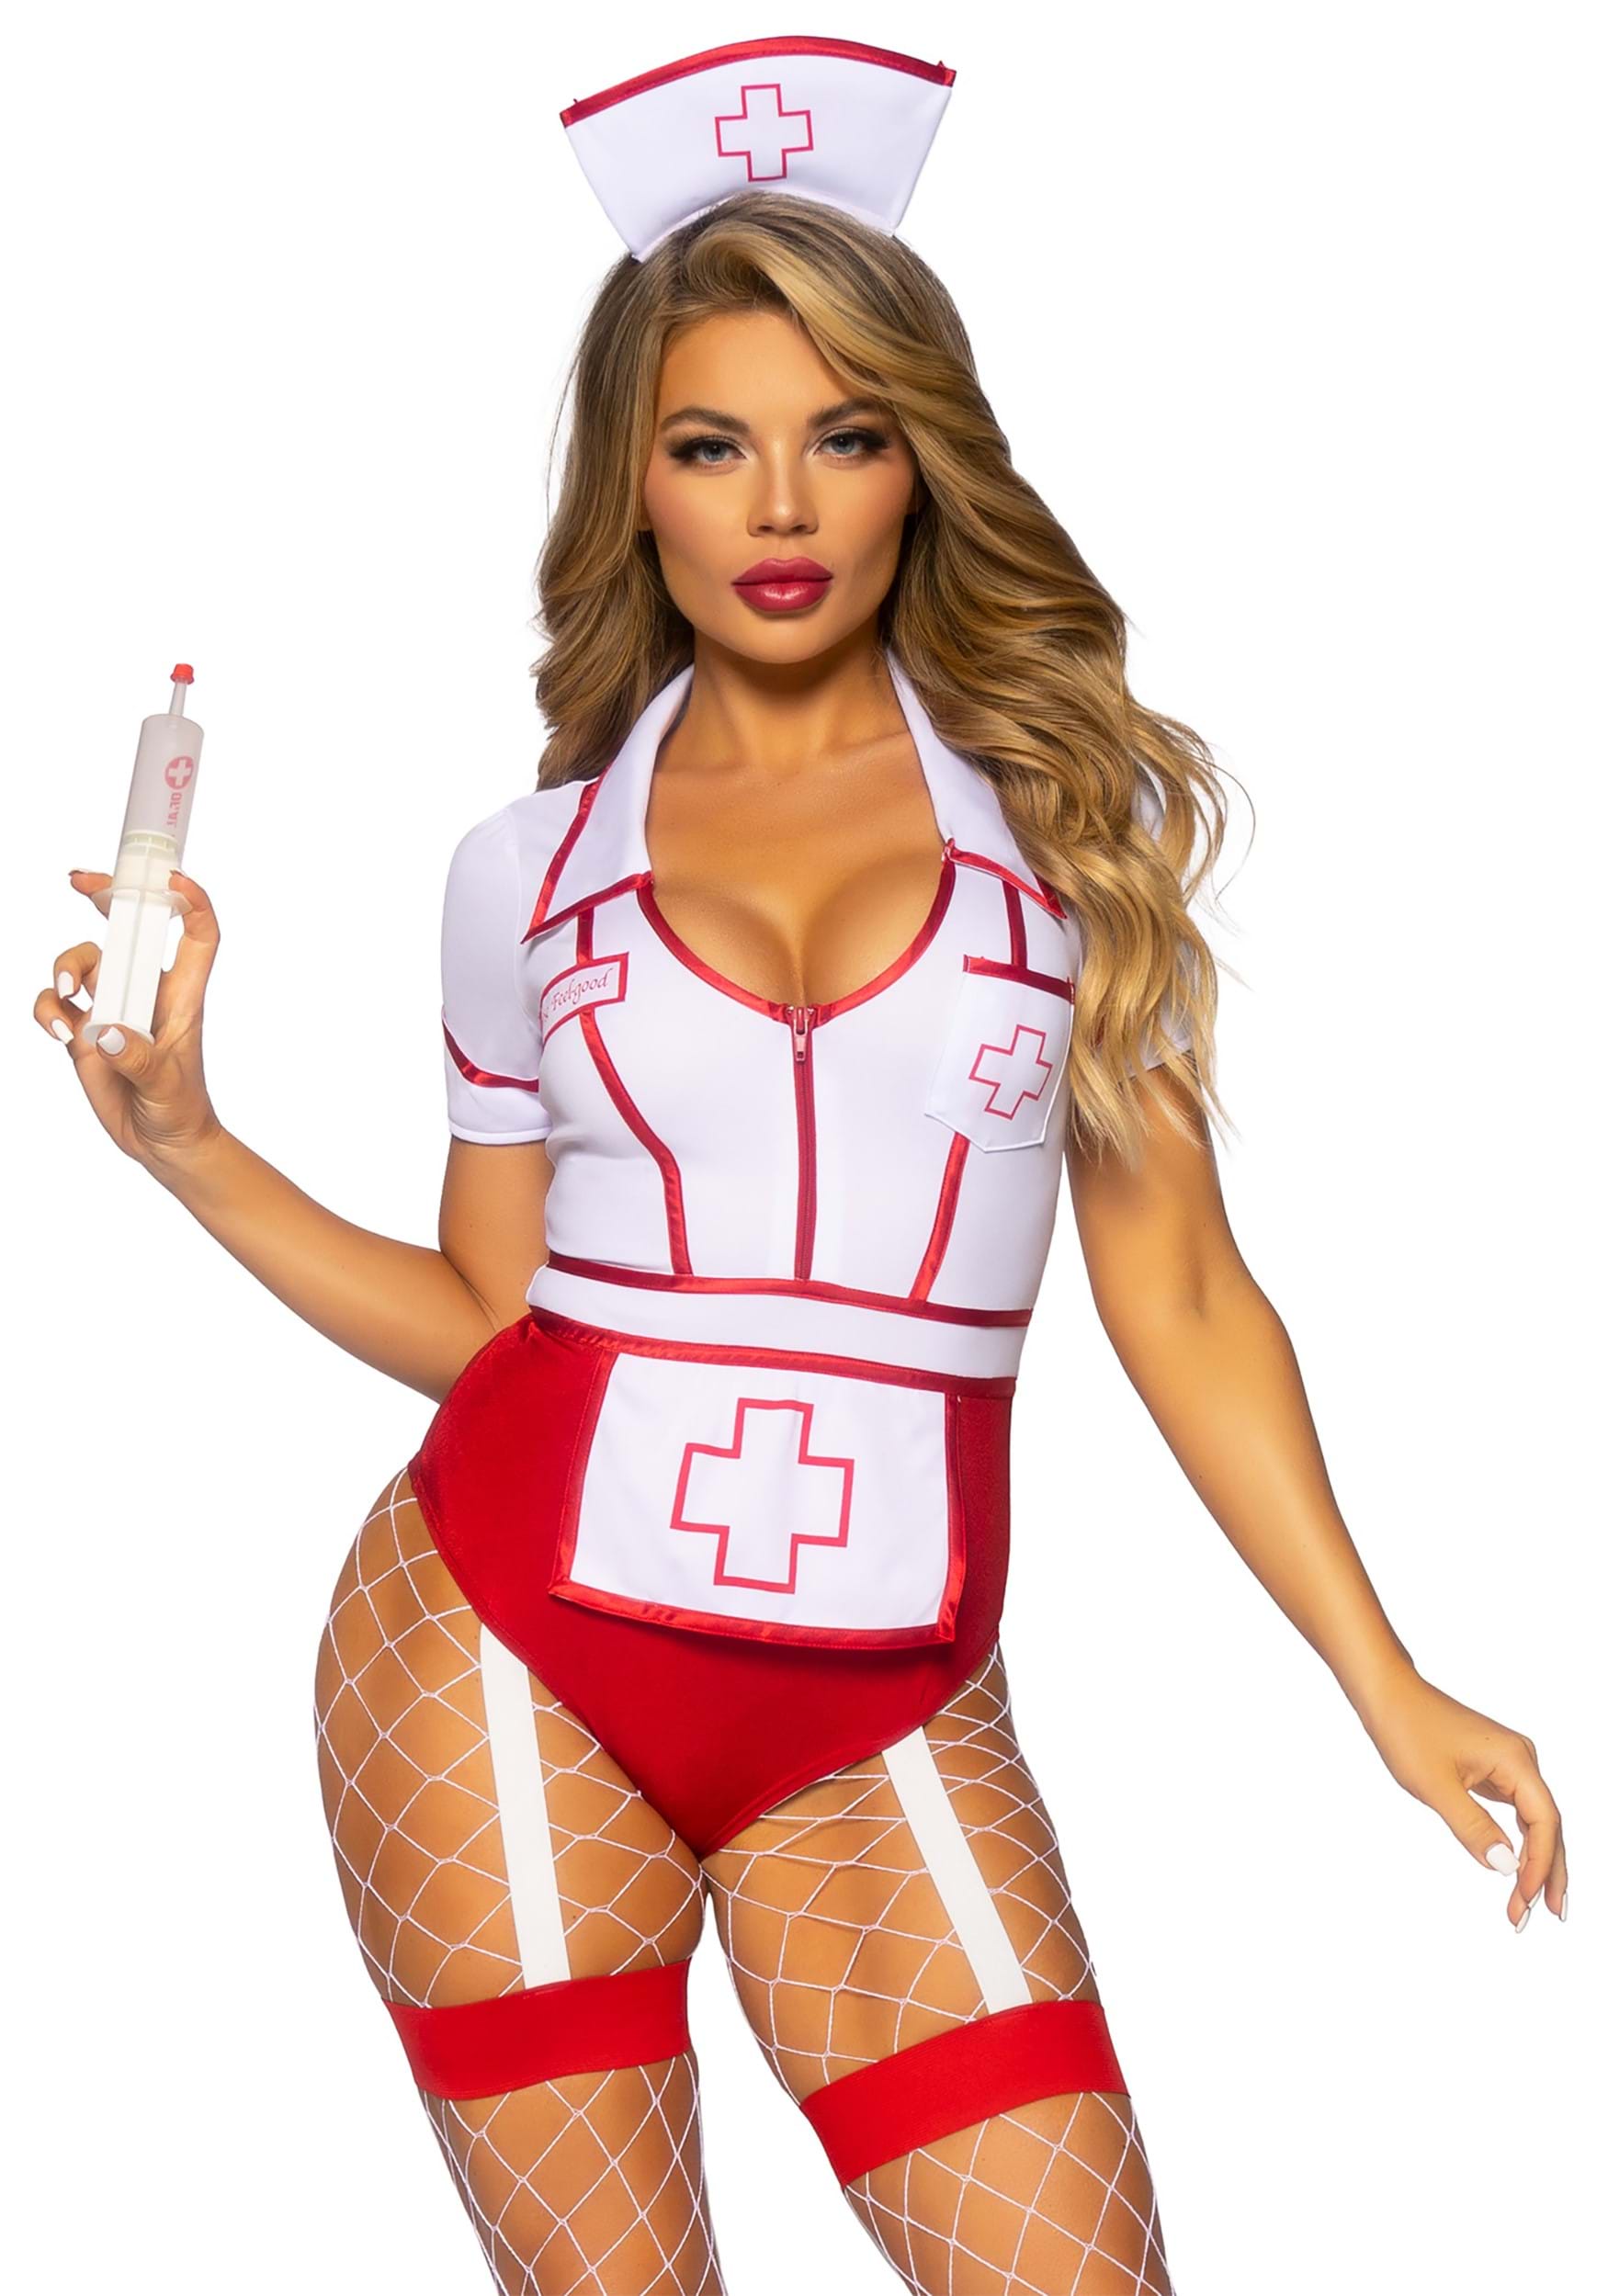 Women's Feelgood Sexy Nurse Costume